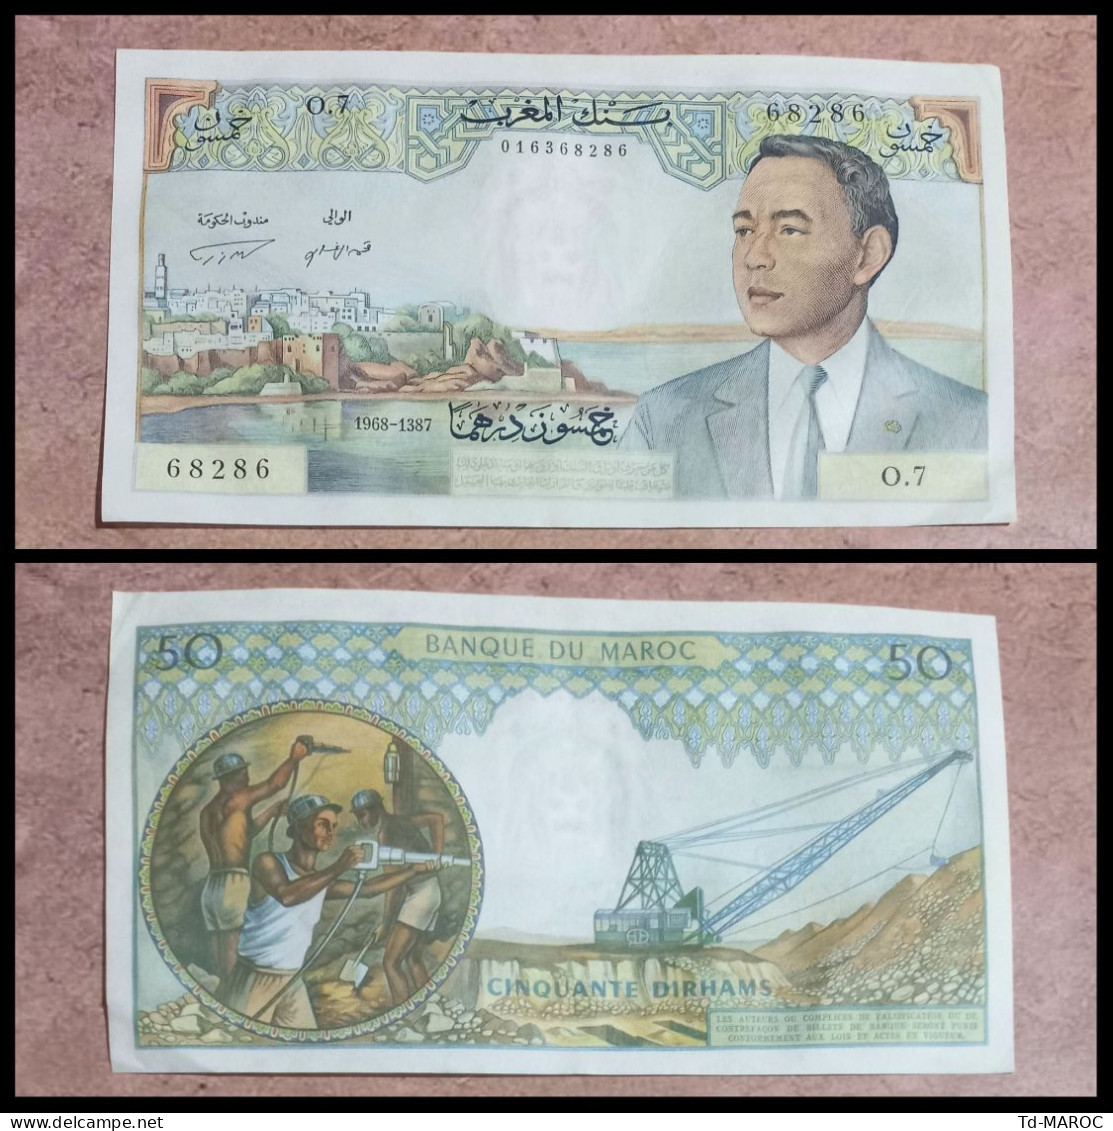 MAROC : Billet De 50 Dirhams 1968 P.55c / Alph.O.7 N° De Série RADAR 68286 - Marruecos